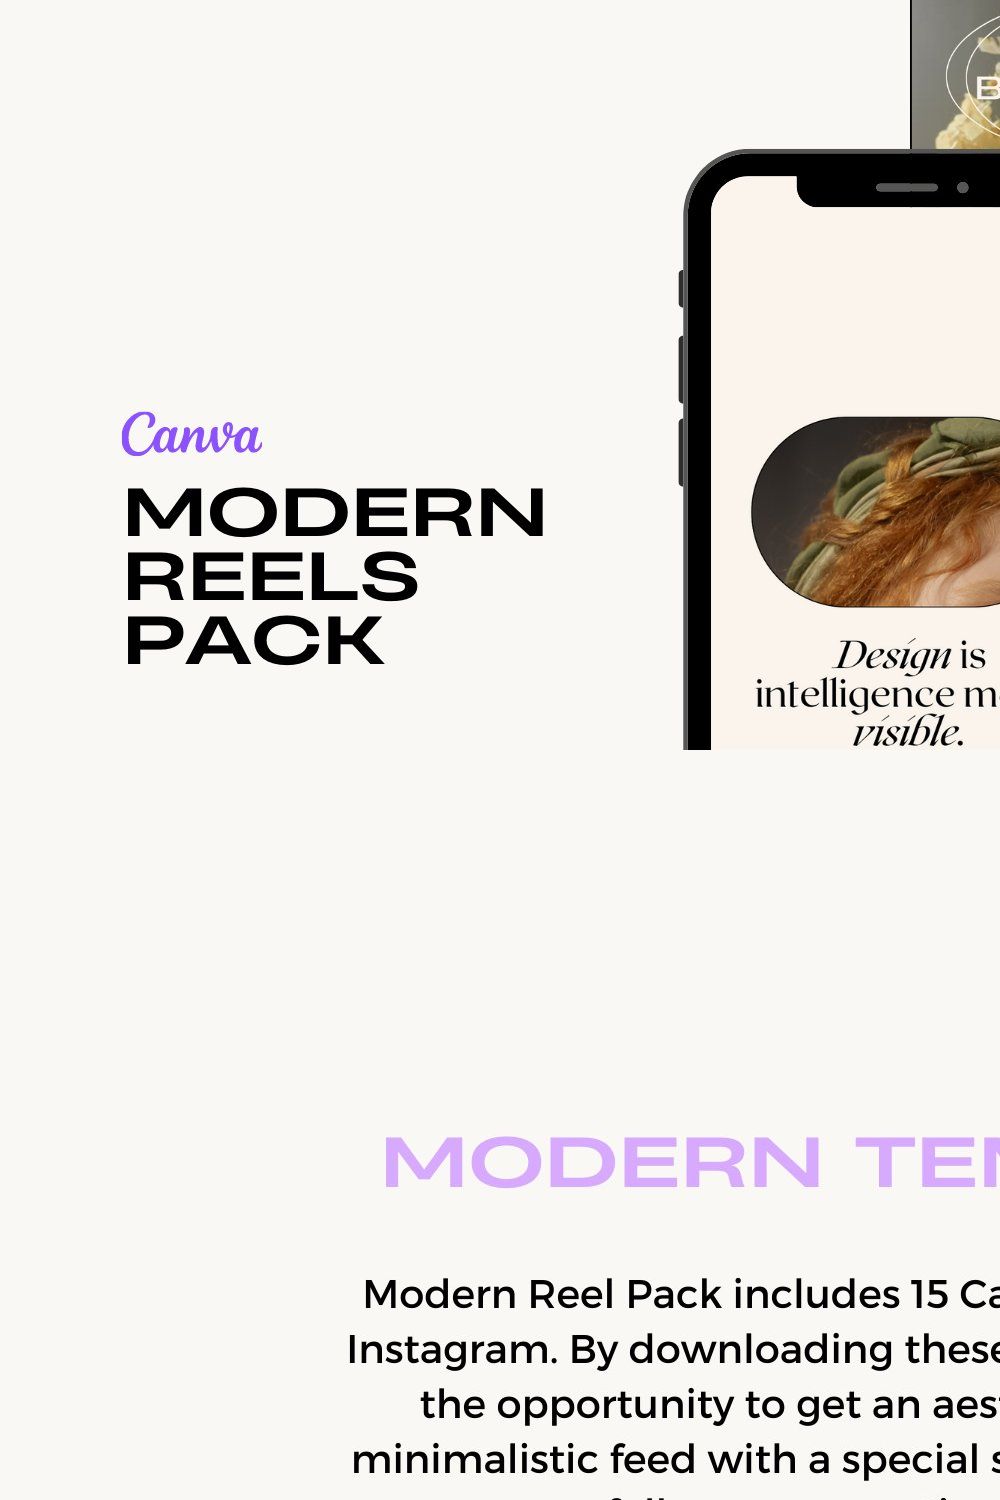 Modern Reel Pack pinterest preview image.